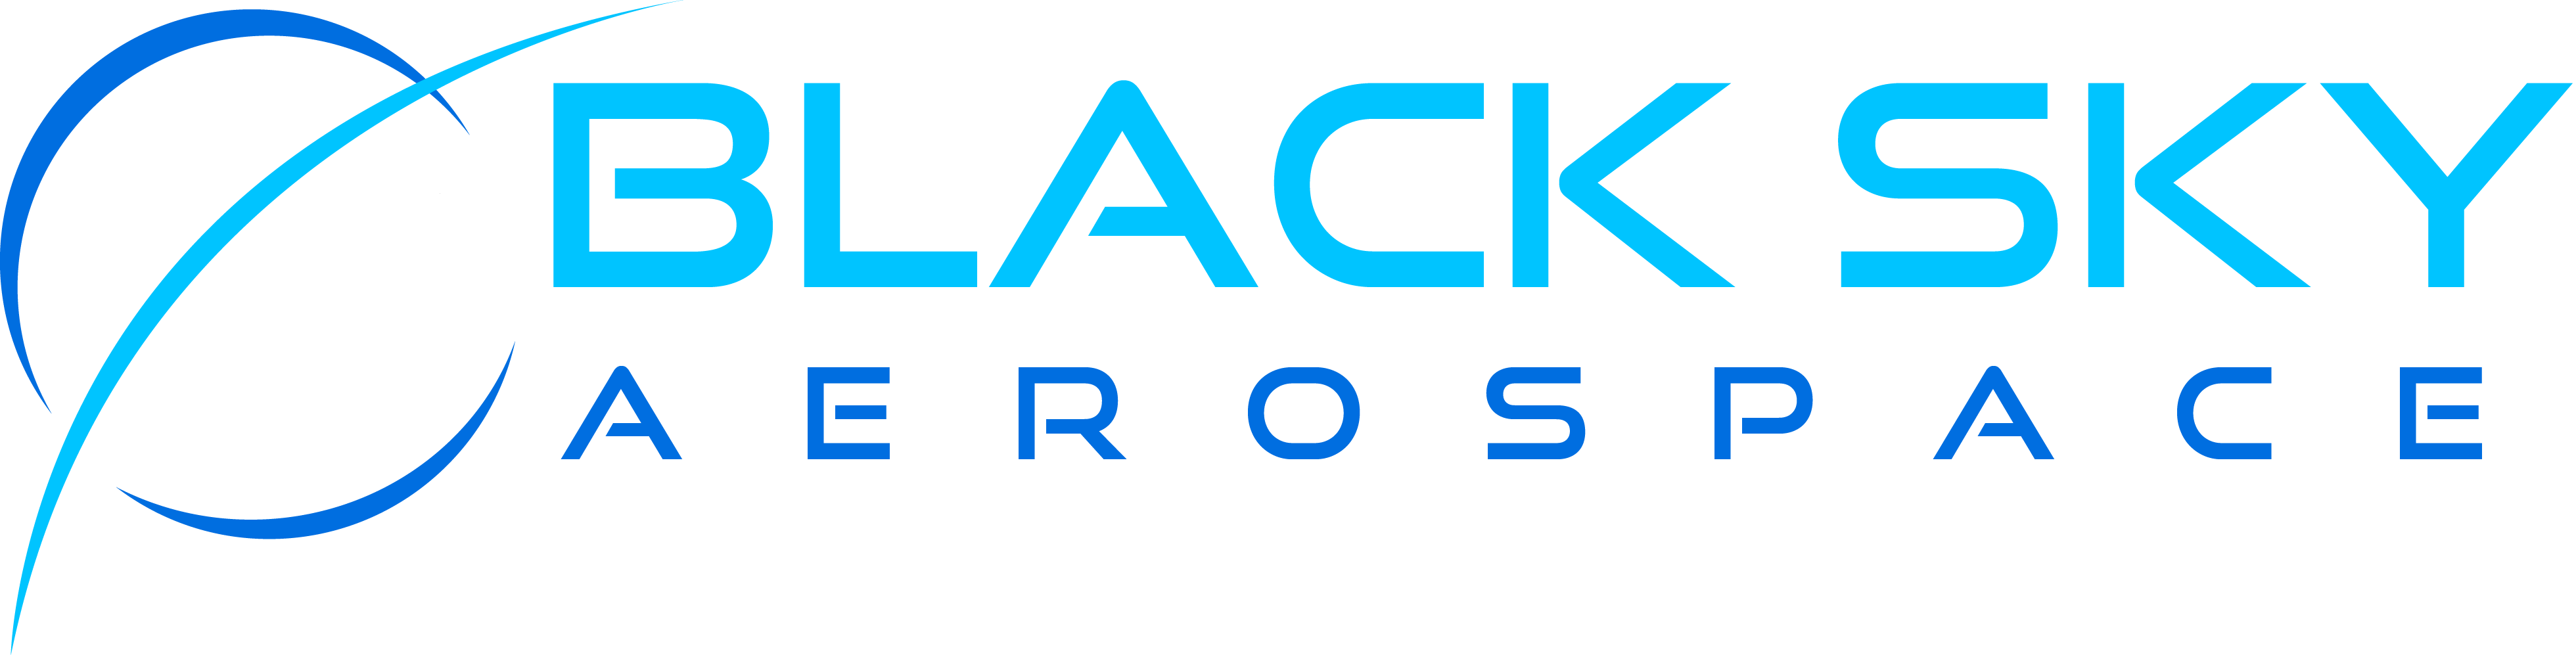 Black Sky Aerospace logo